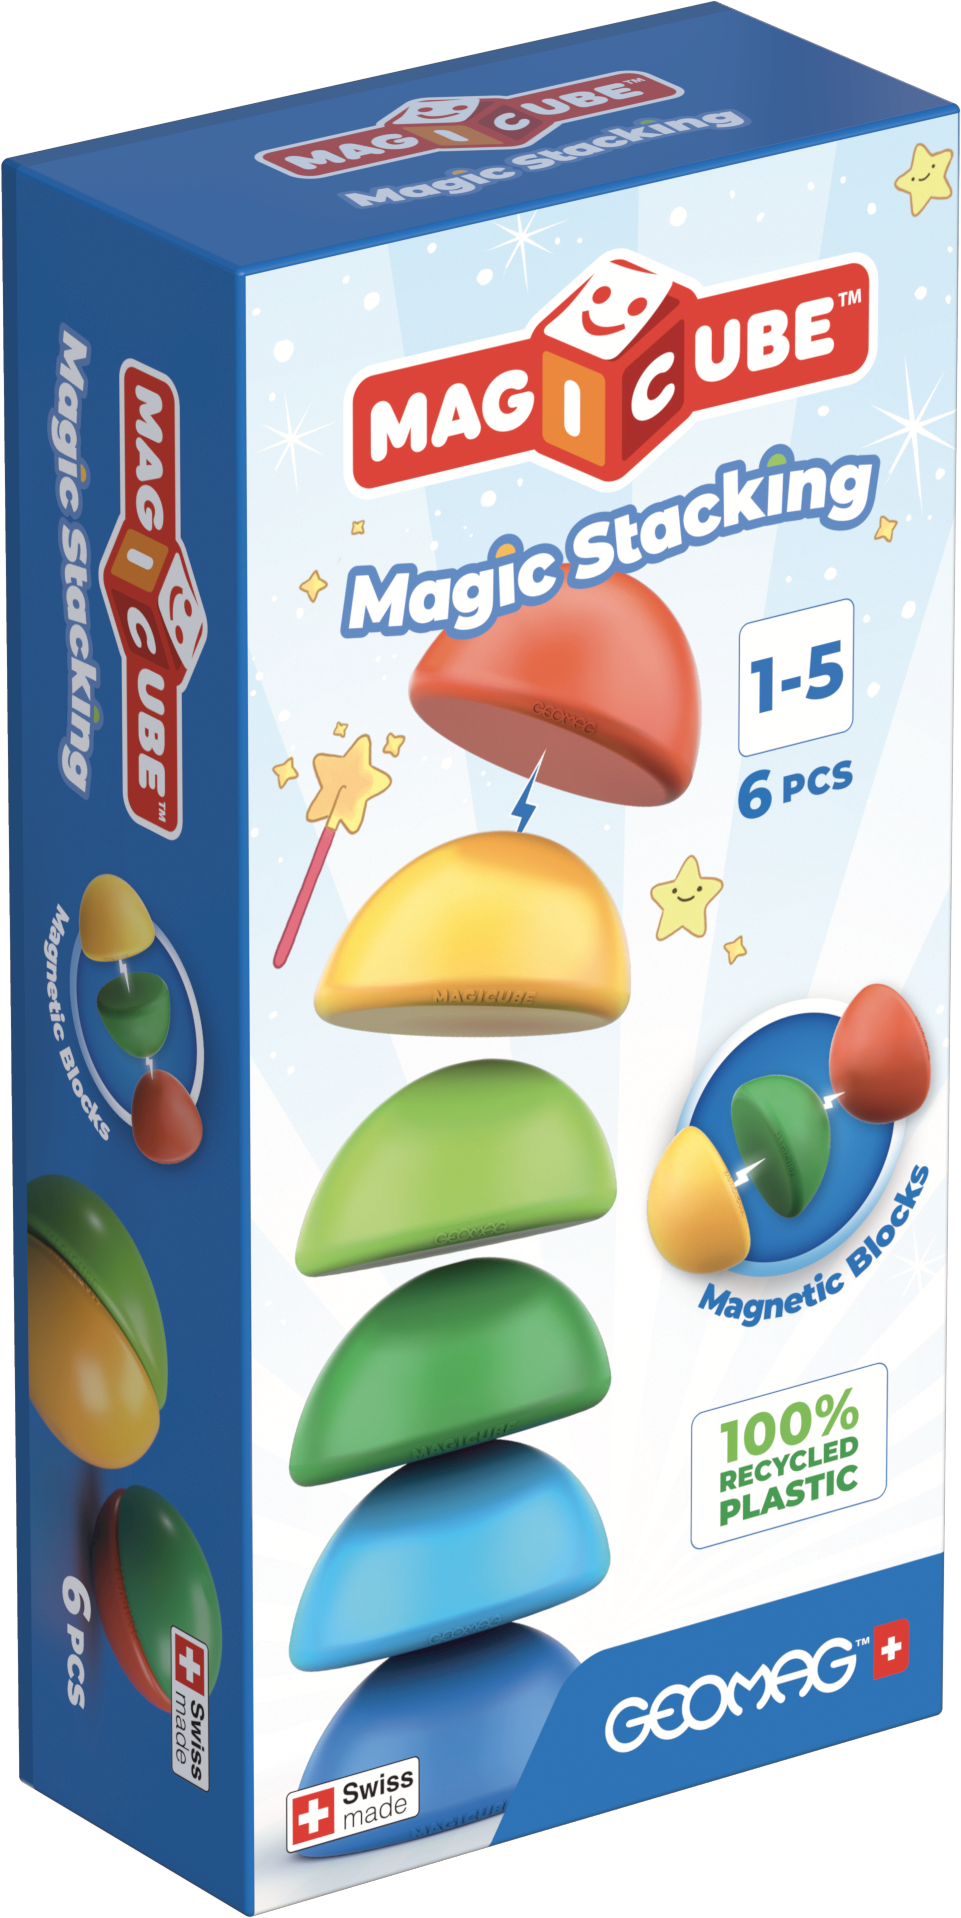 Geomag magicube magic blocks stacking - 6 pezzi - 100% recycled - Geomag